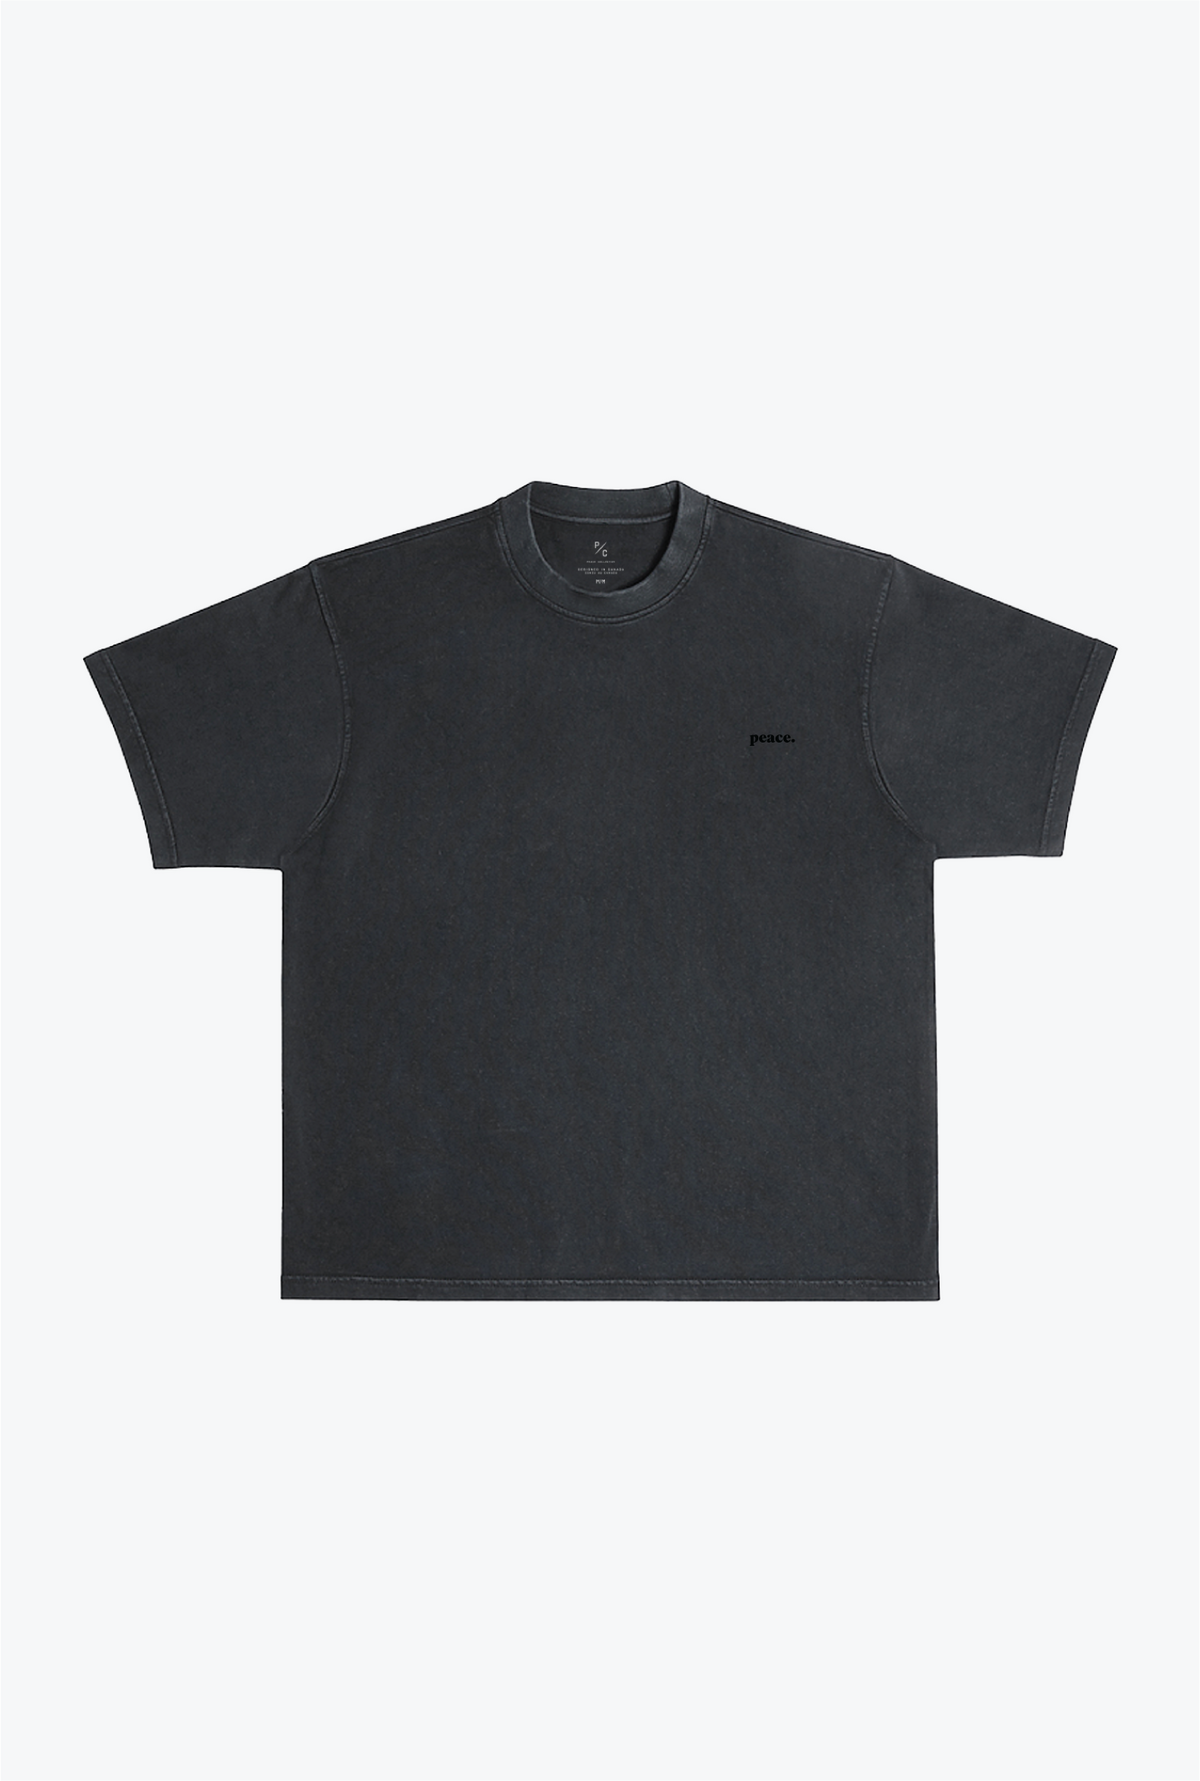 P/C Basics Pigment Dye T Shirt - Black